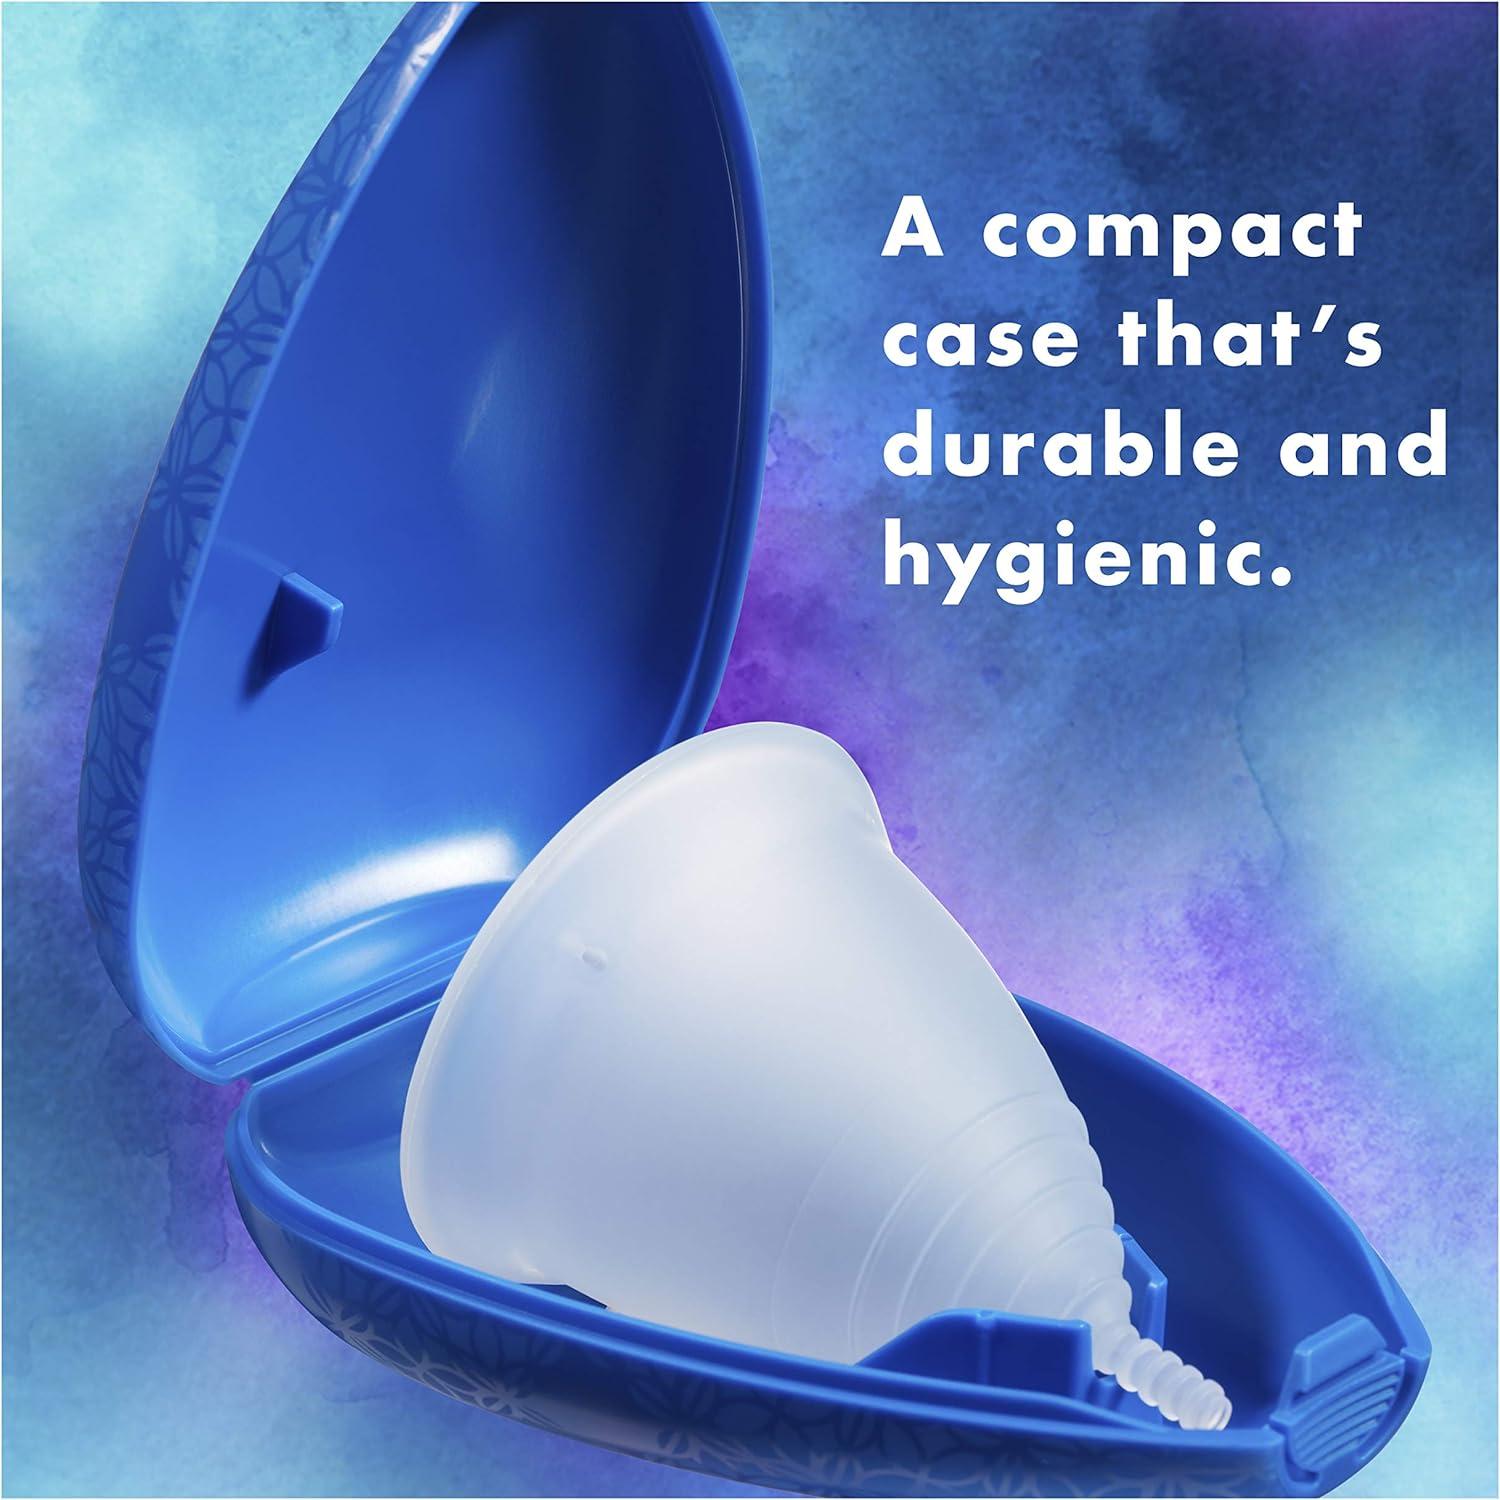 Menstrual Cup Case, Reusable Cup Case